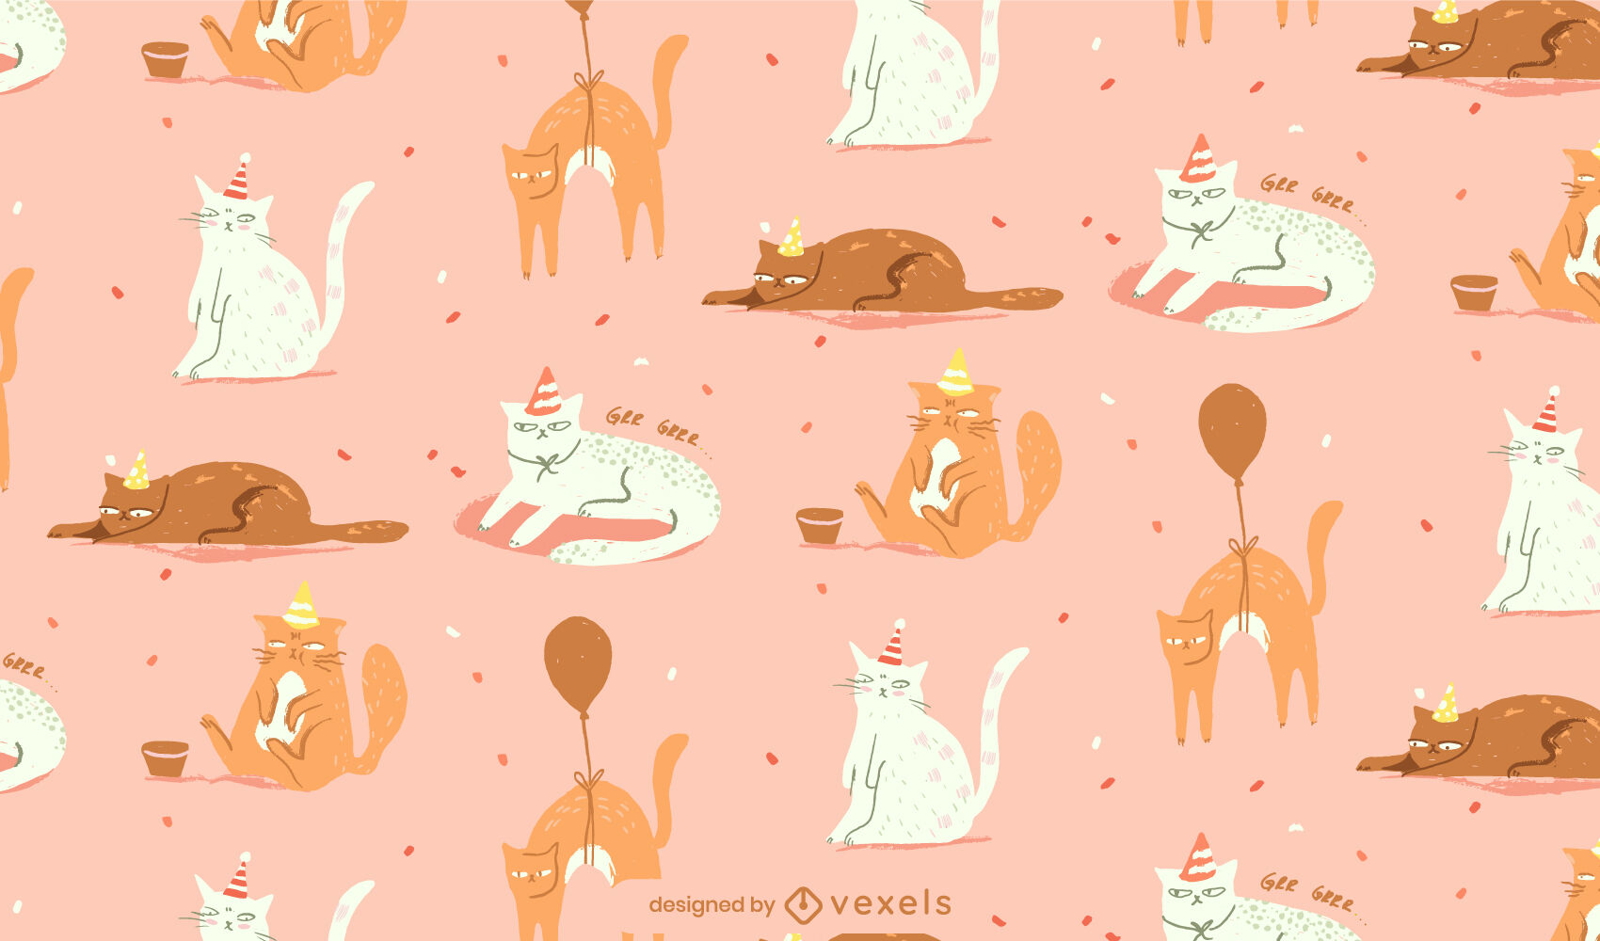 Tired cats illustration pattern